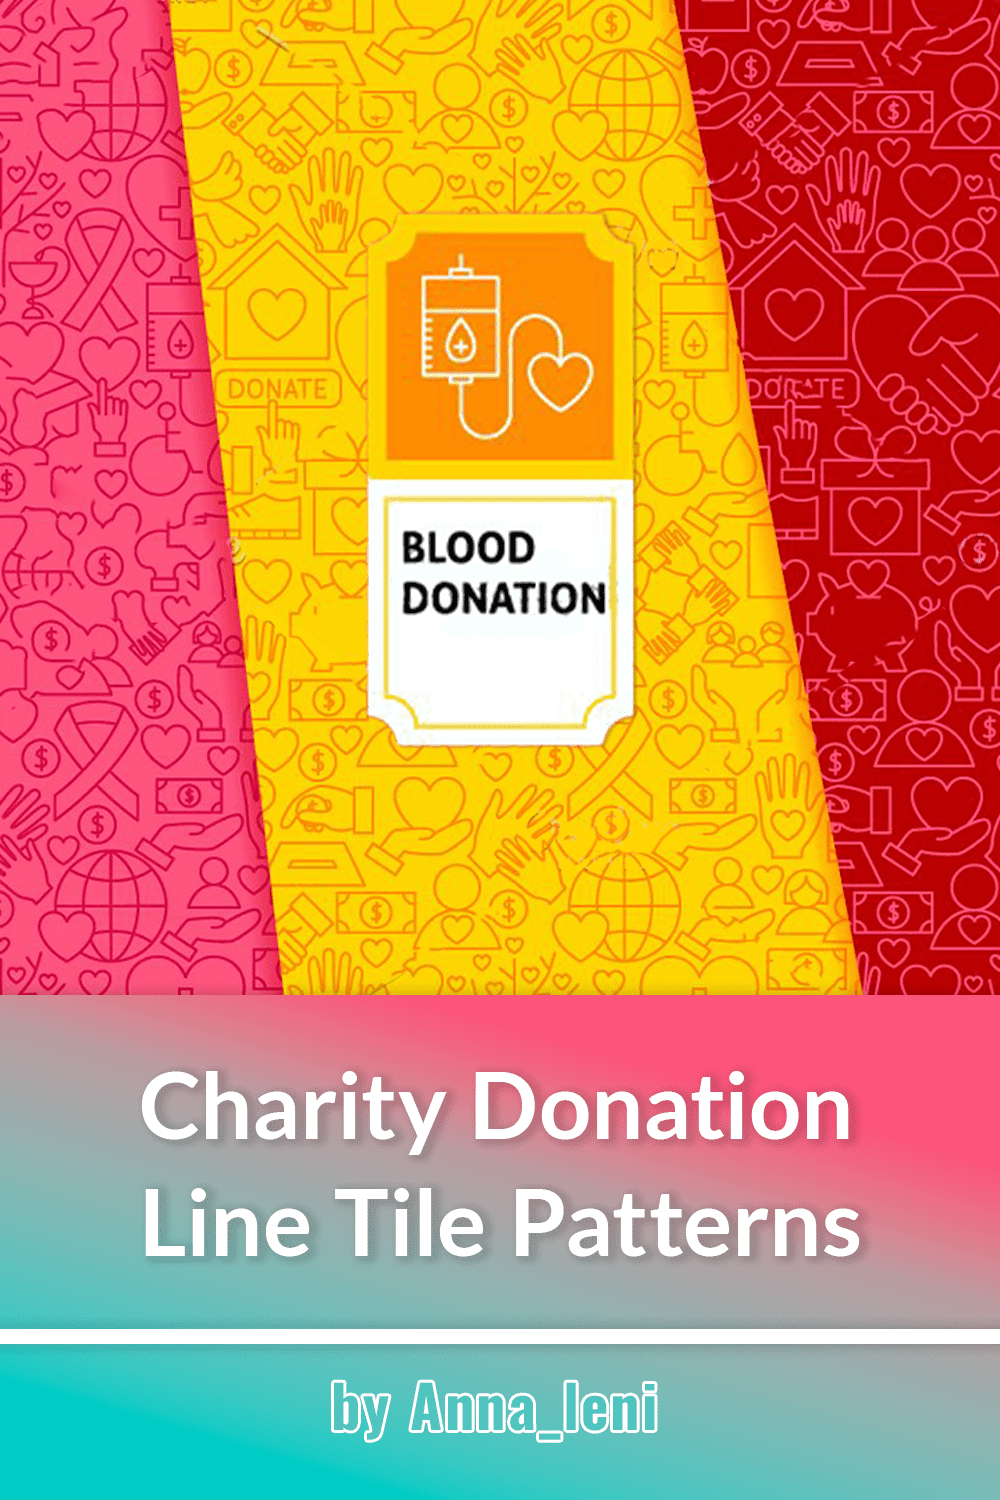 charity donation line tile patterns pinterest